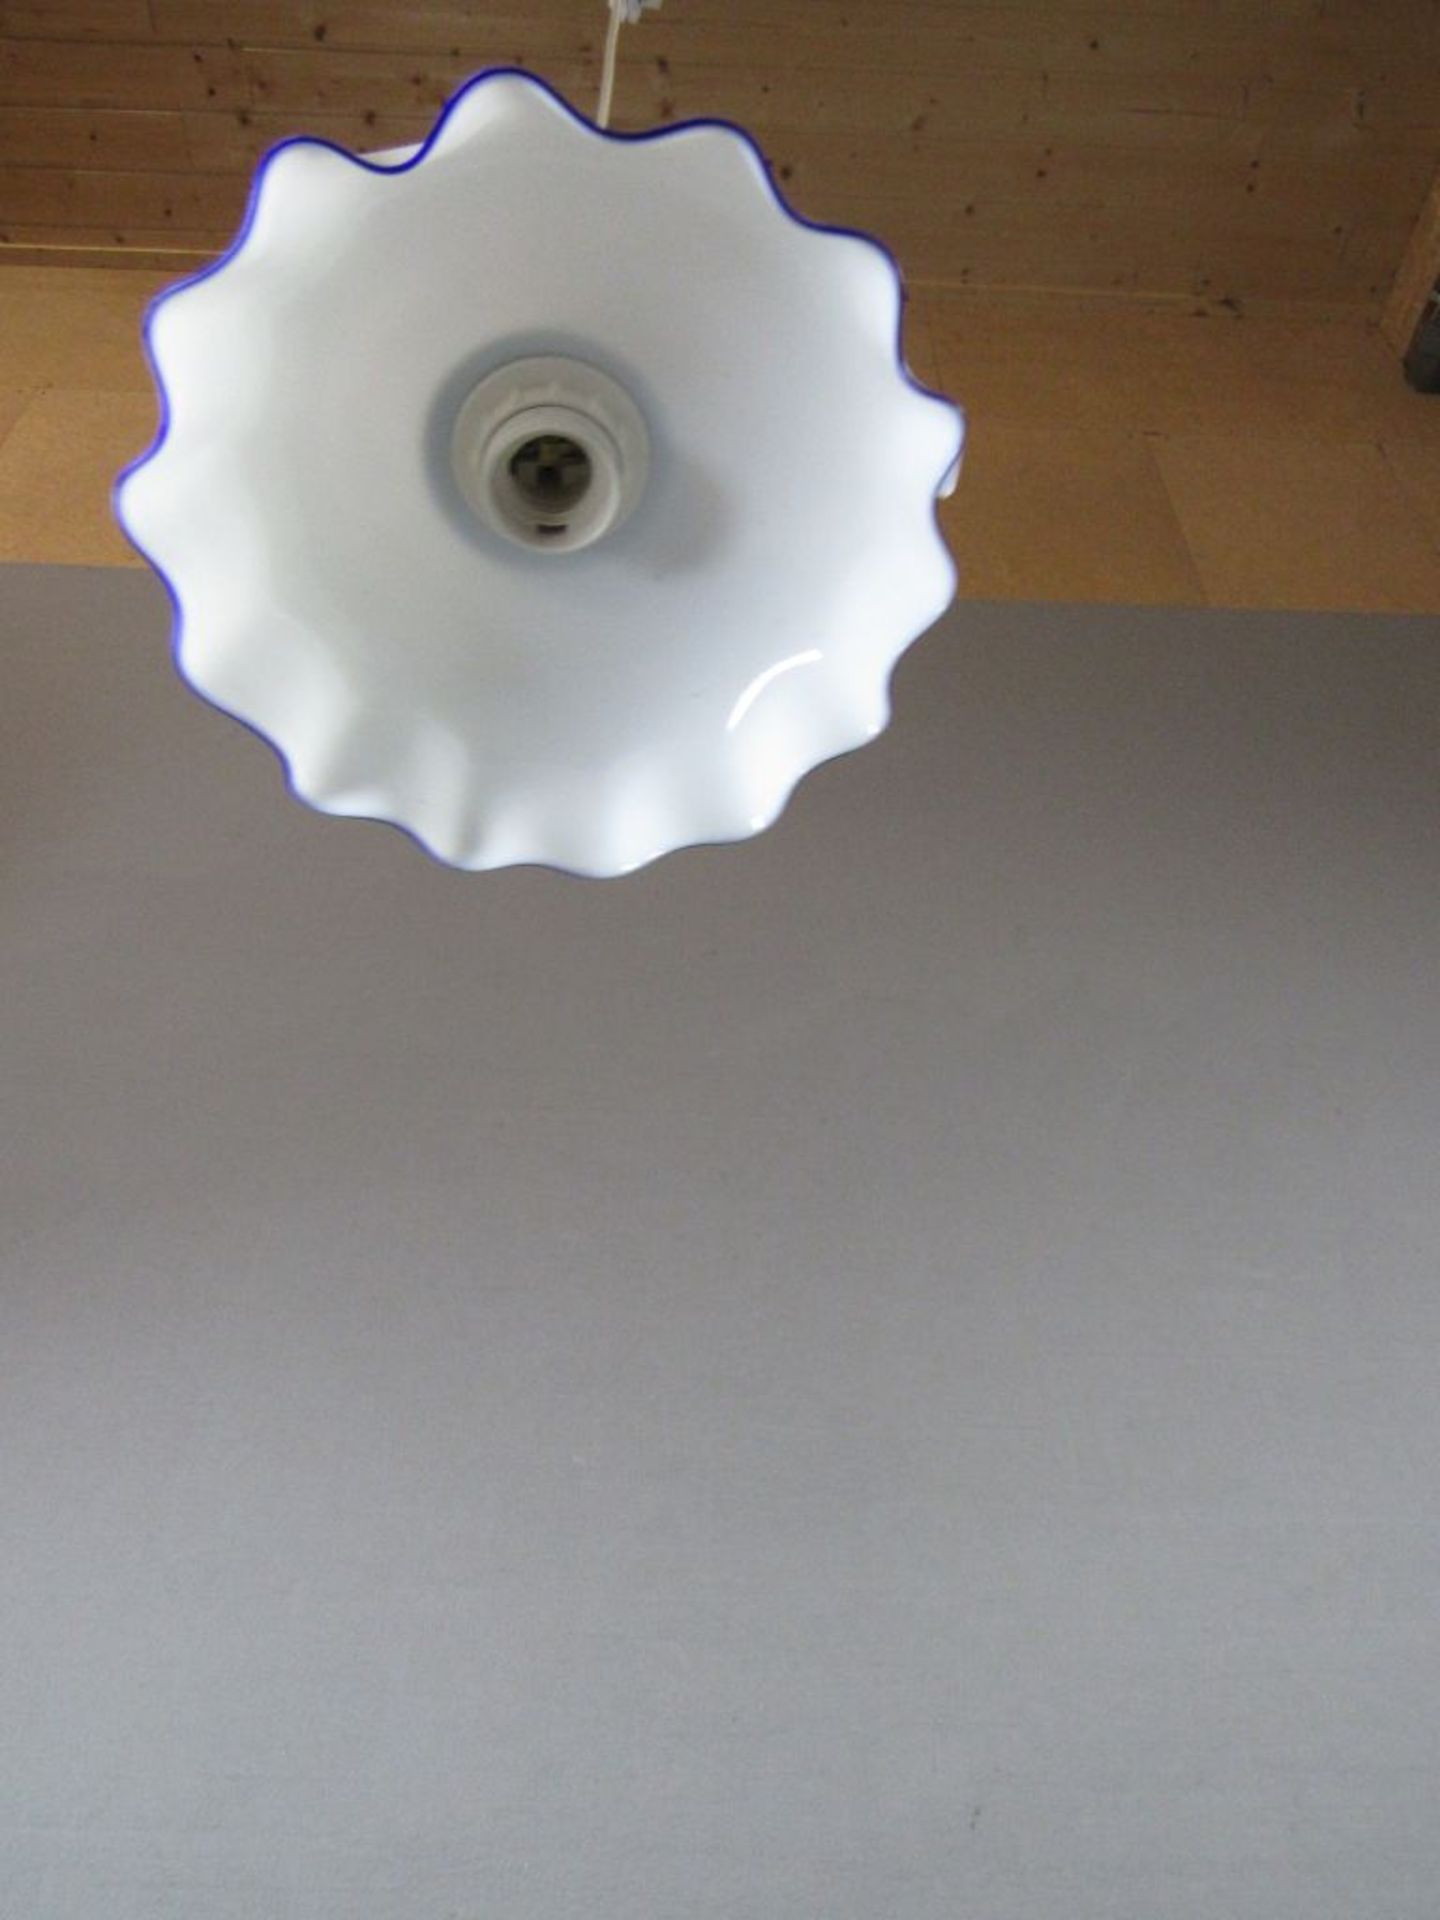 Deckenlampe komplett neu elektrifiziert Durchmesser 22cm - Image 2 of 2